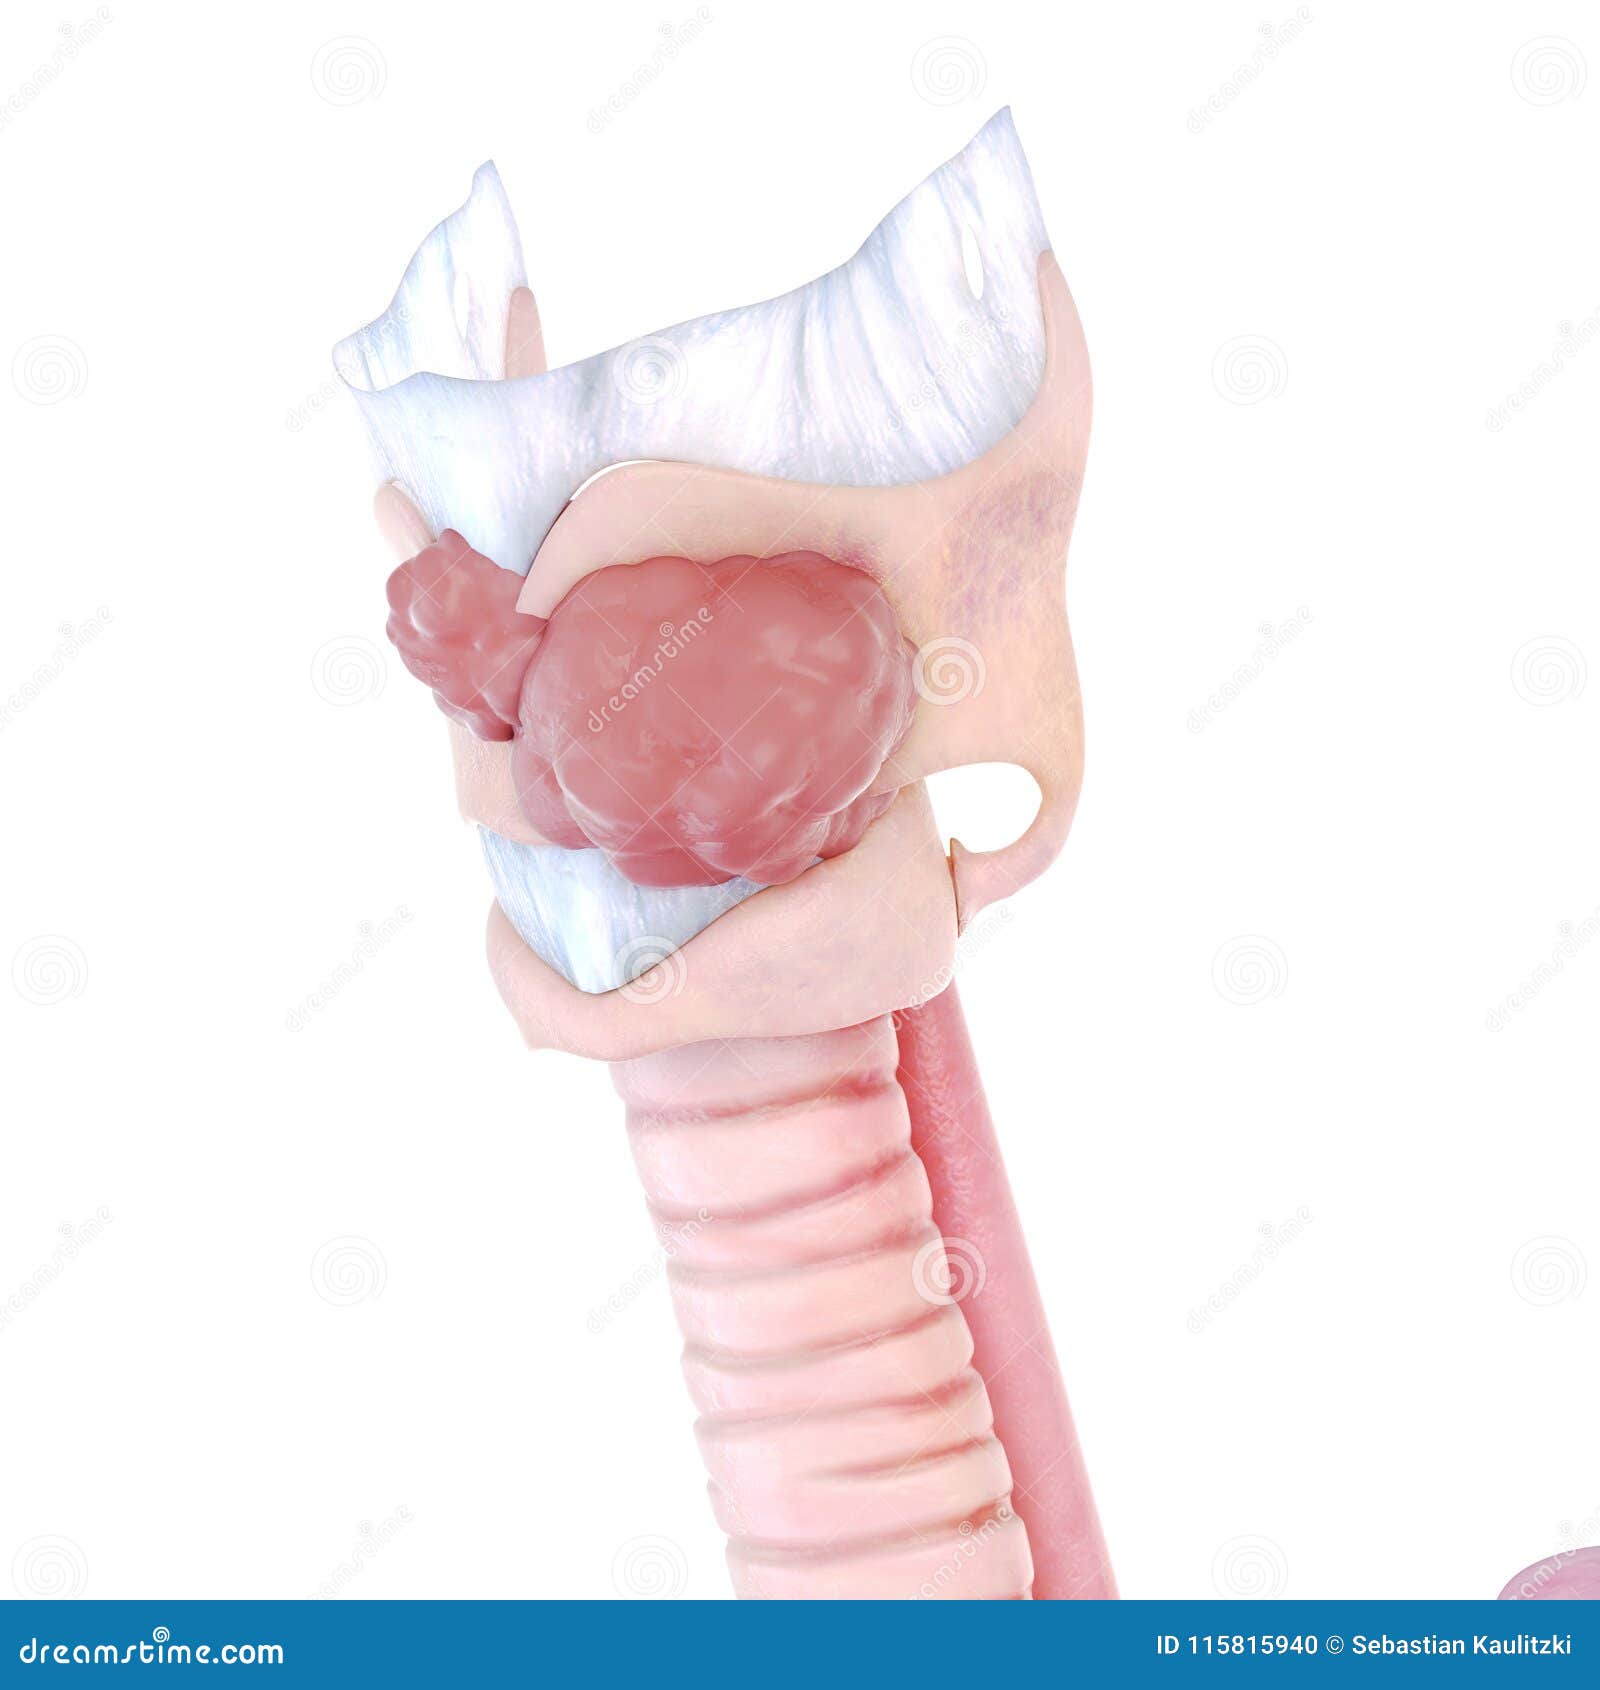 Larynx cancer stock illustration. Illustration of body ...